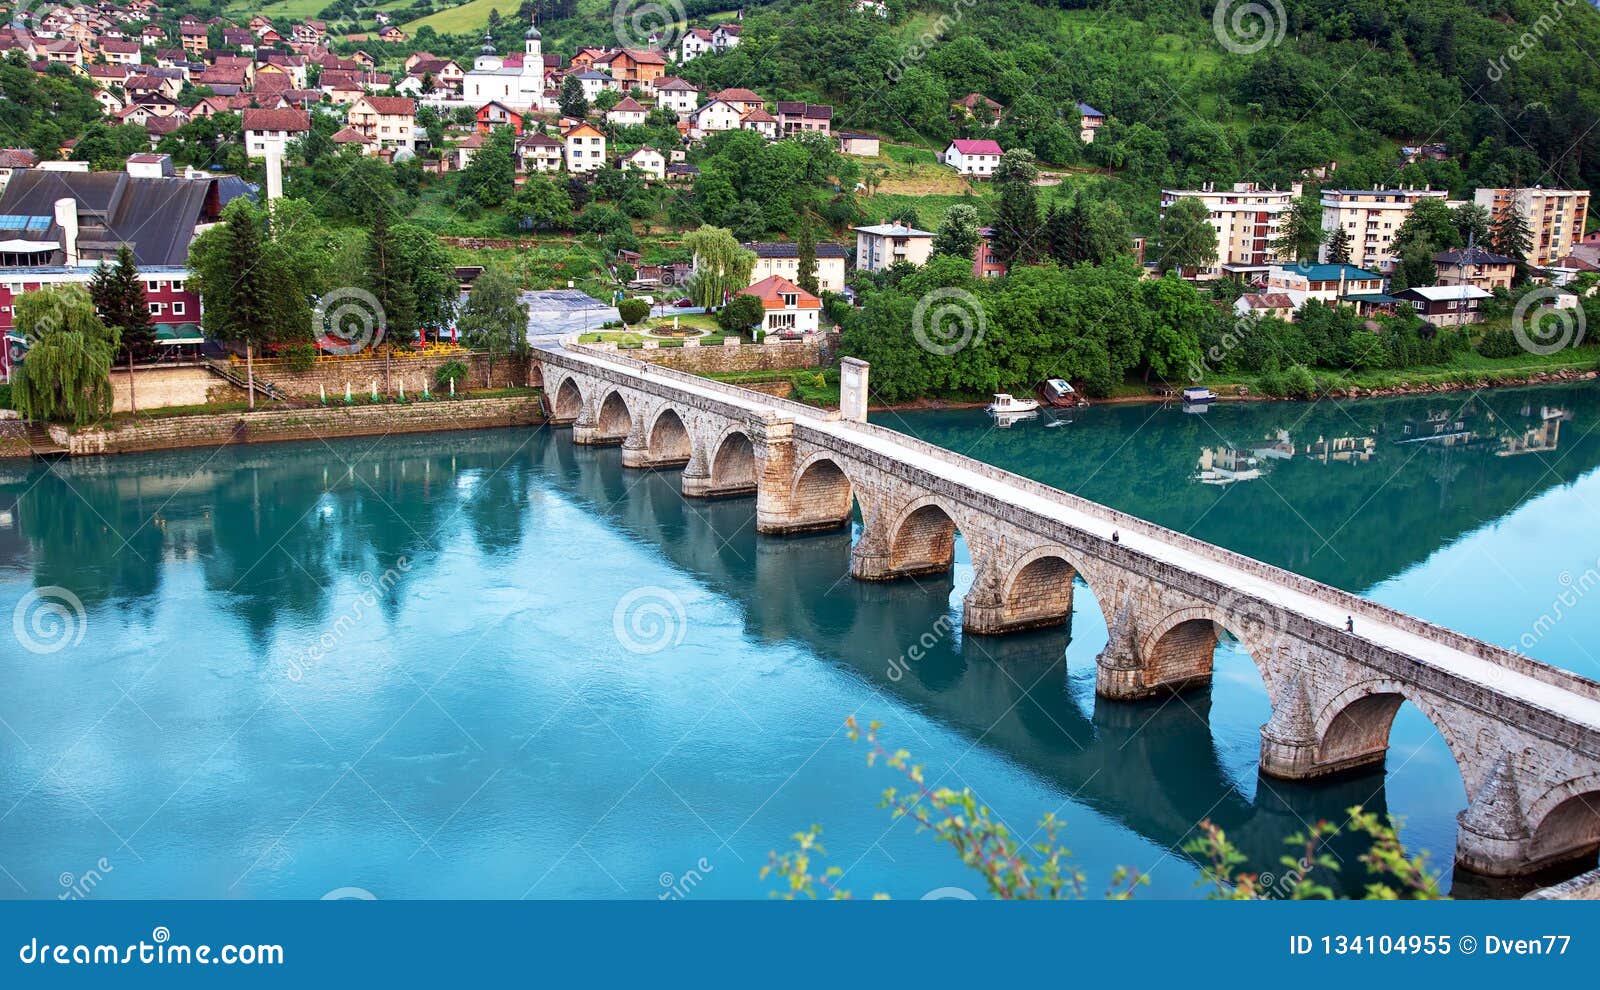 mehmed pasha sokolovic old stone historic bridge over drina river in visegrad,bosnia and herzegovina